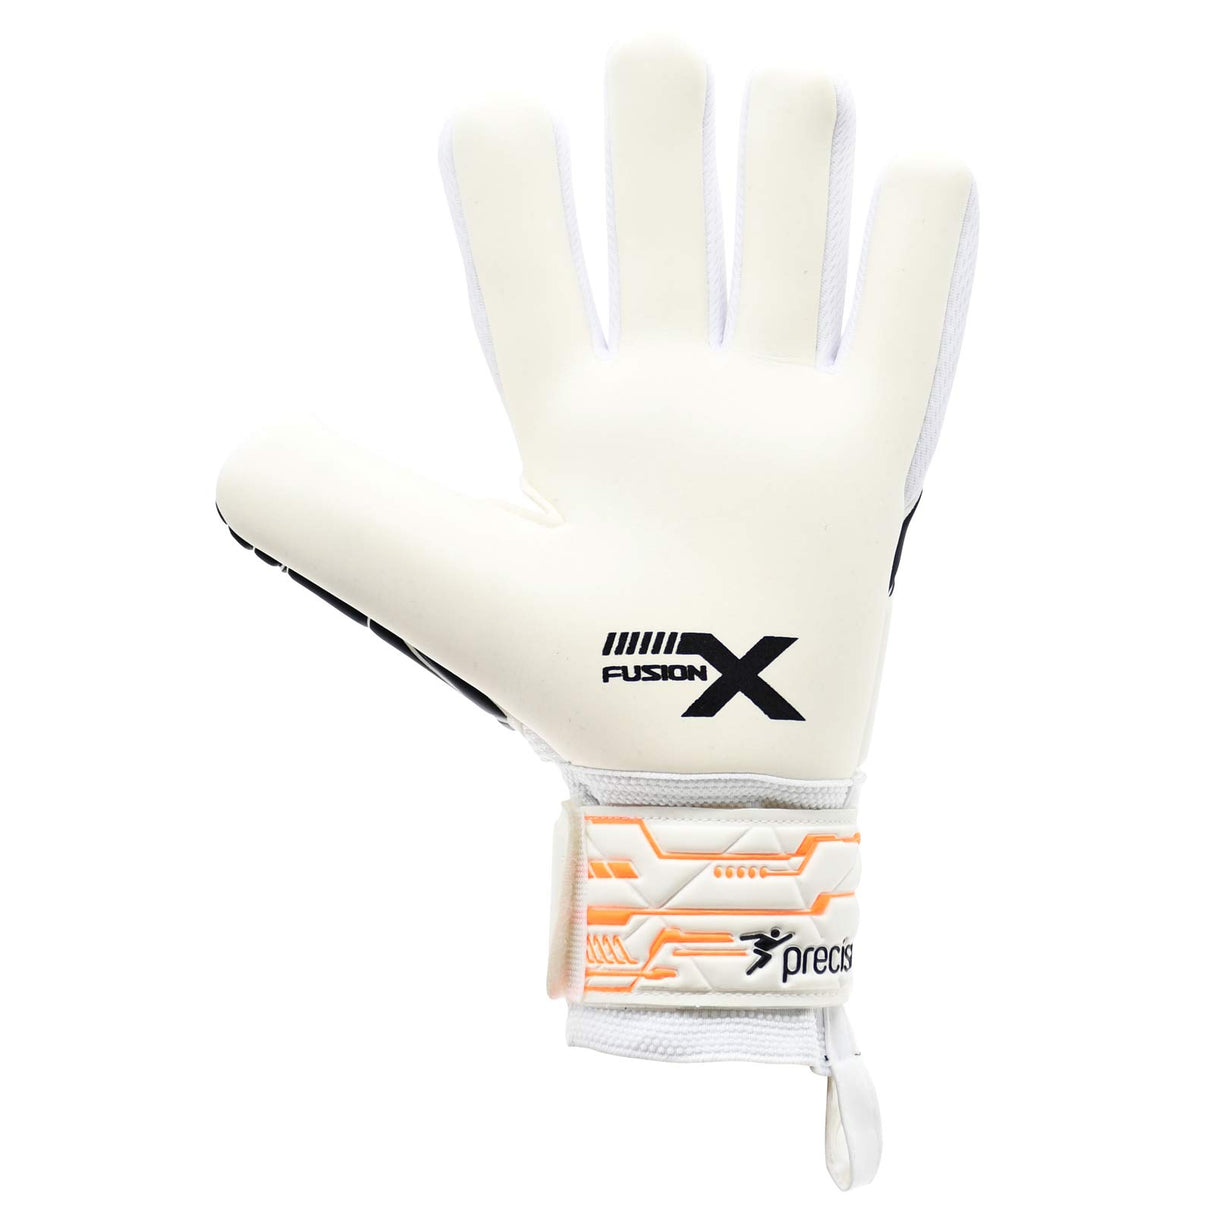 Precision Fusion X Negative Replica Kids Goalkeeper Gloves